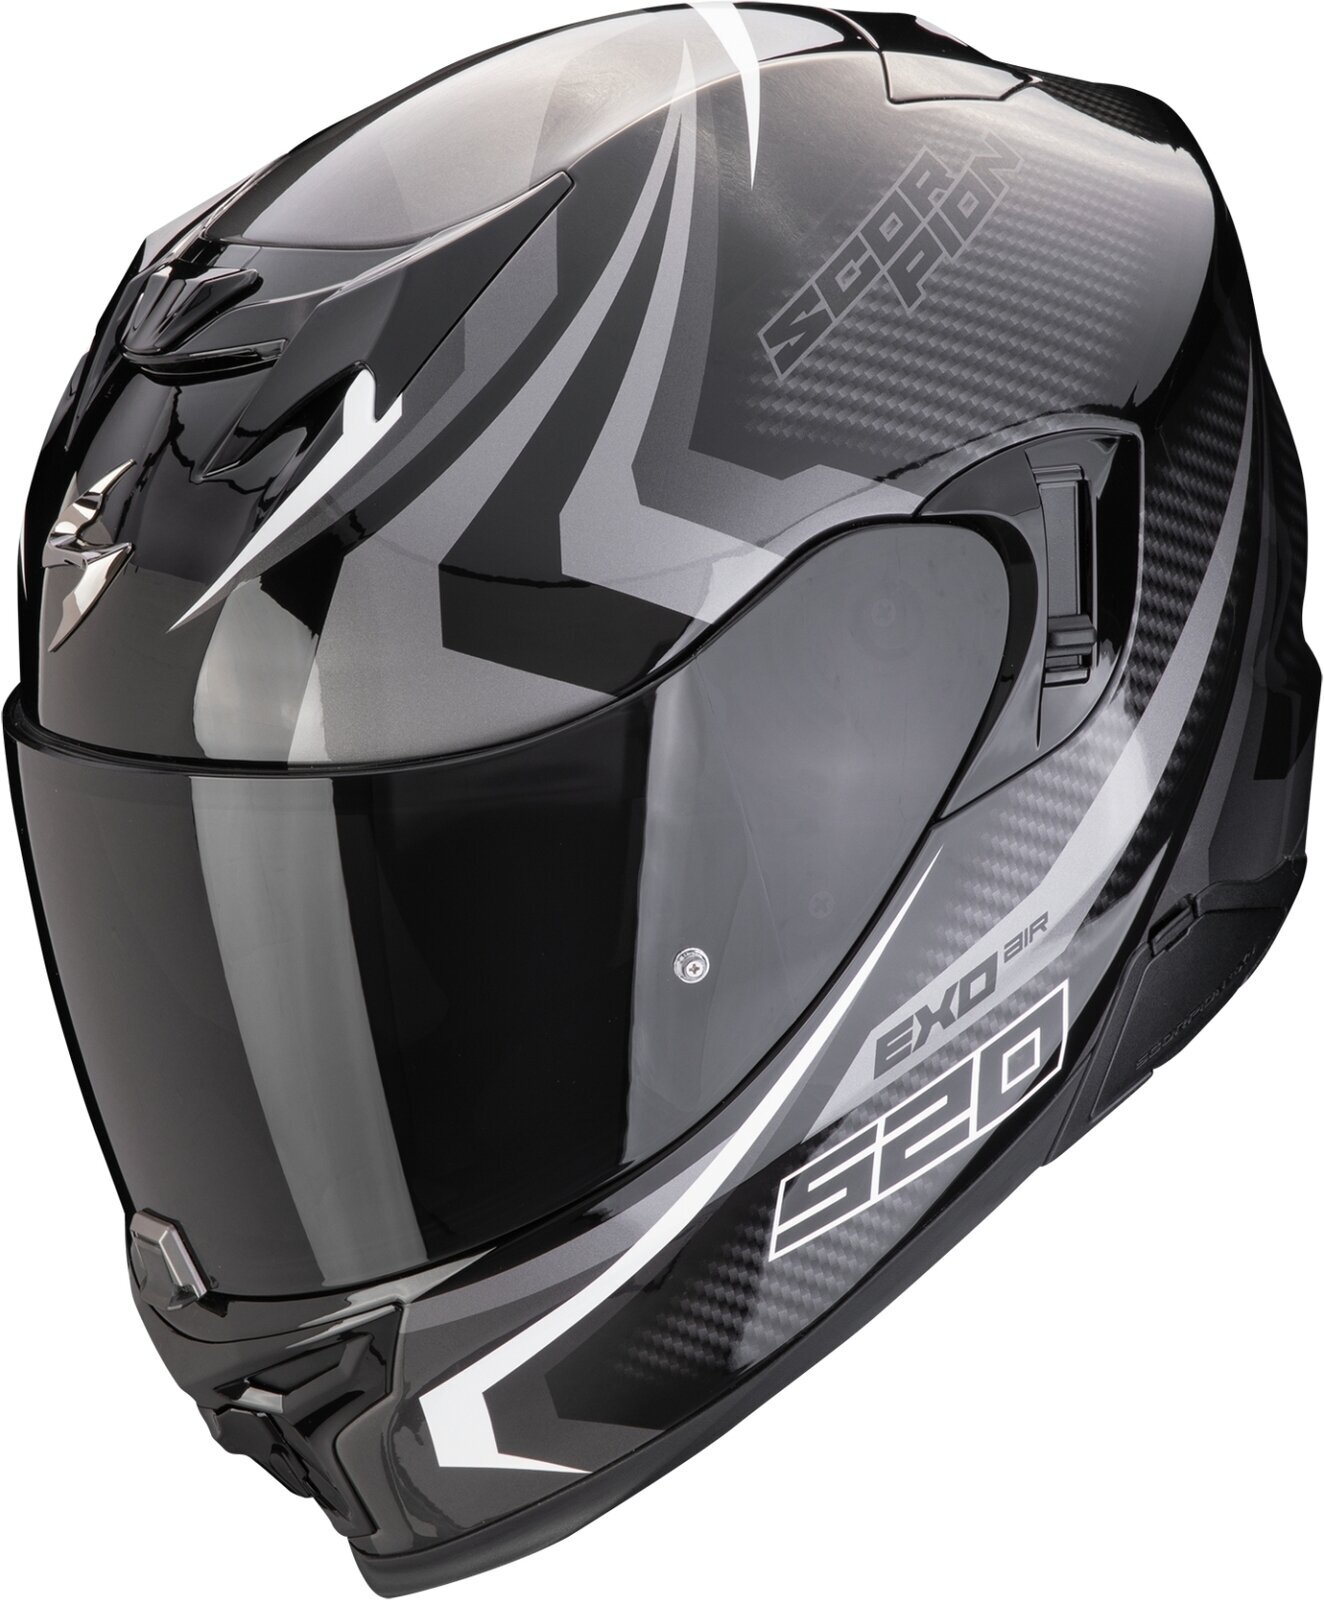 Helm Scorpion EXO 520 EVO AIR TERRA Black/Silver/White L Helm